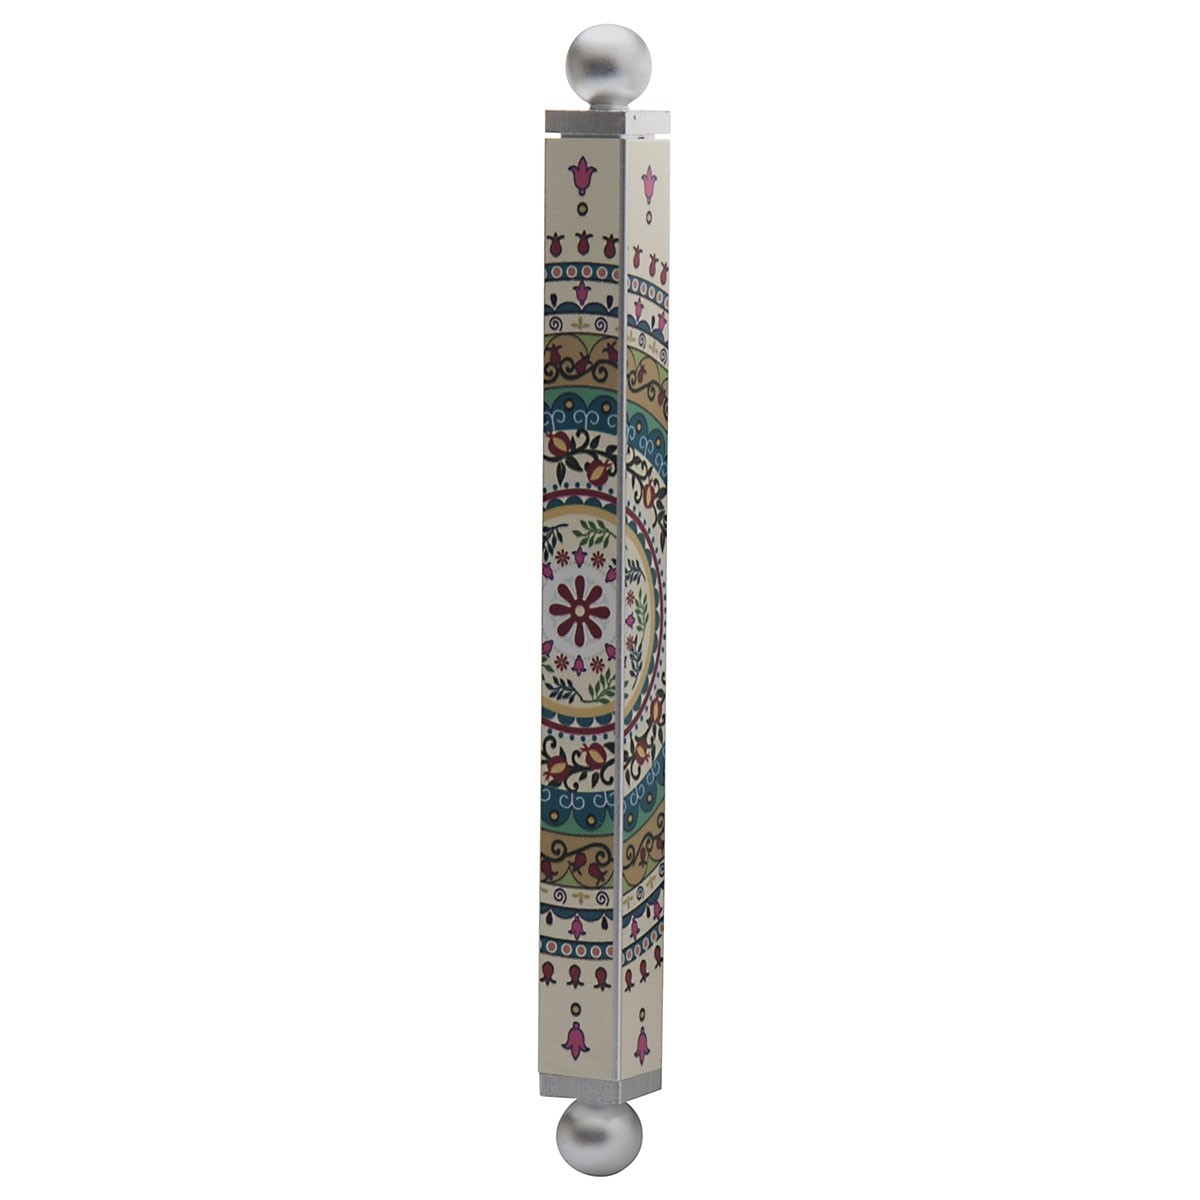 Dorit Judaica Mezuzah Case with Floral Mandala Design - 1